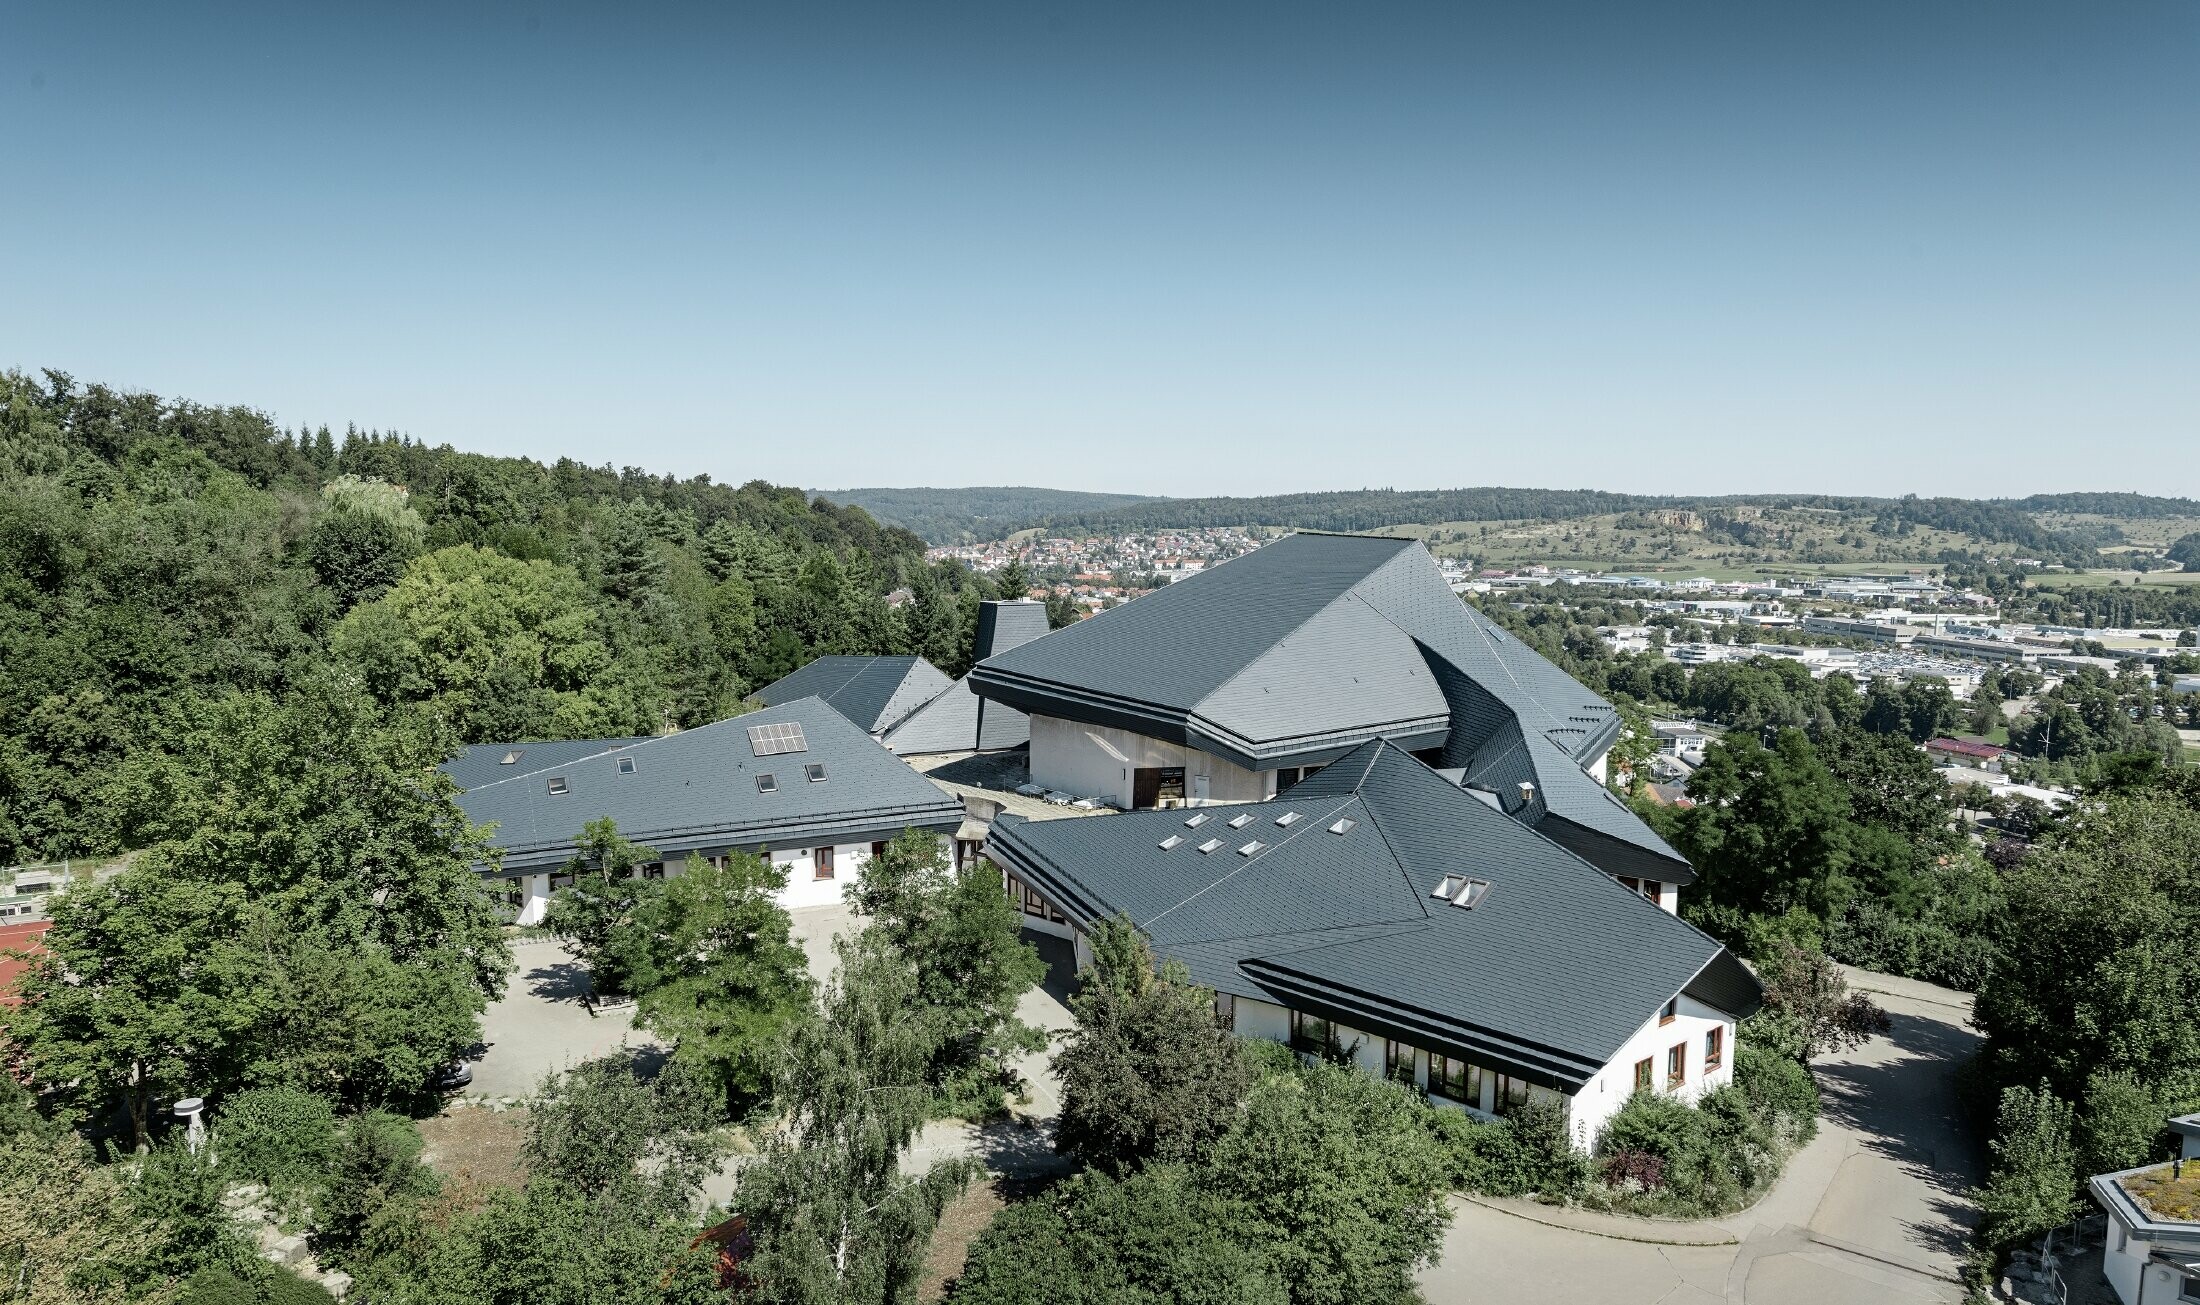 Waldorfska škola u Heidenheimu s novosaniranim krovom, velika krovna površina s mnogo kuteva i krovnih nagiba pokrivena je PREFA krovnom šindrom u antracit boji